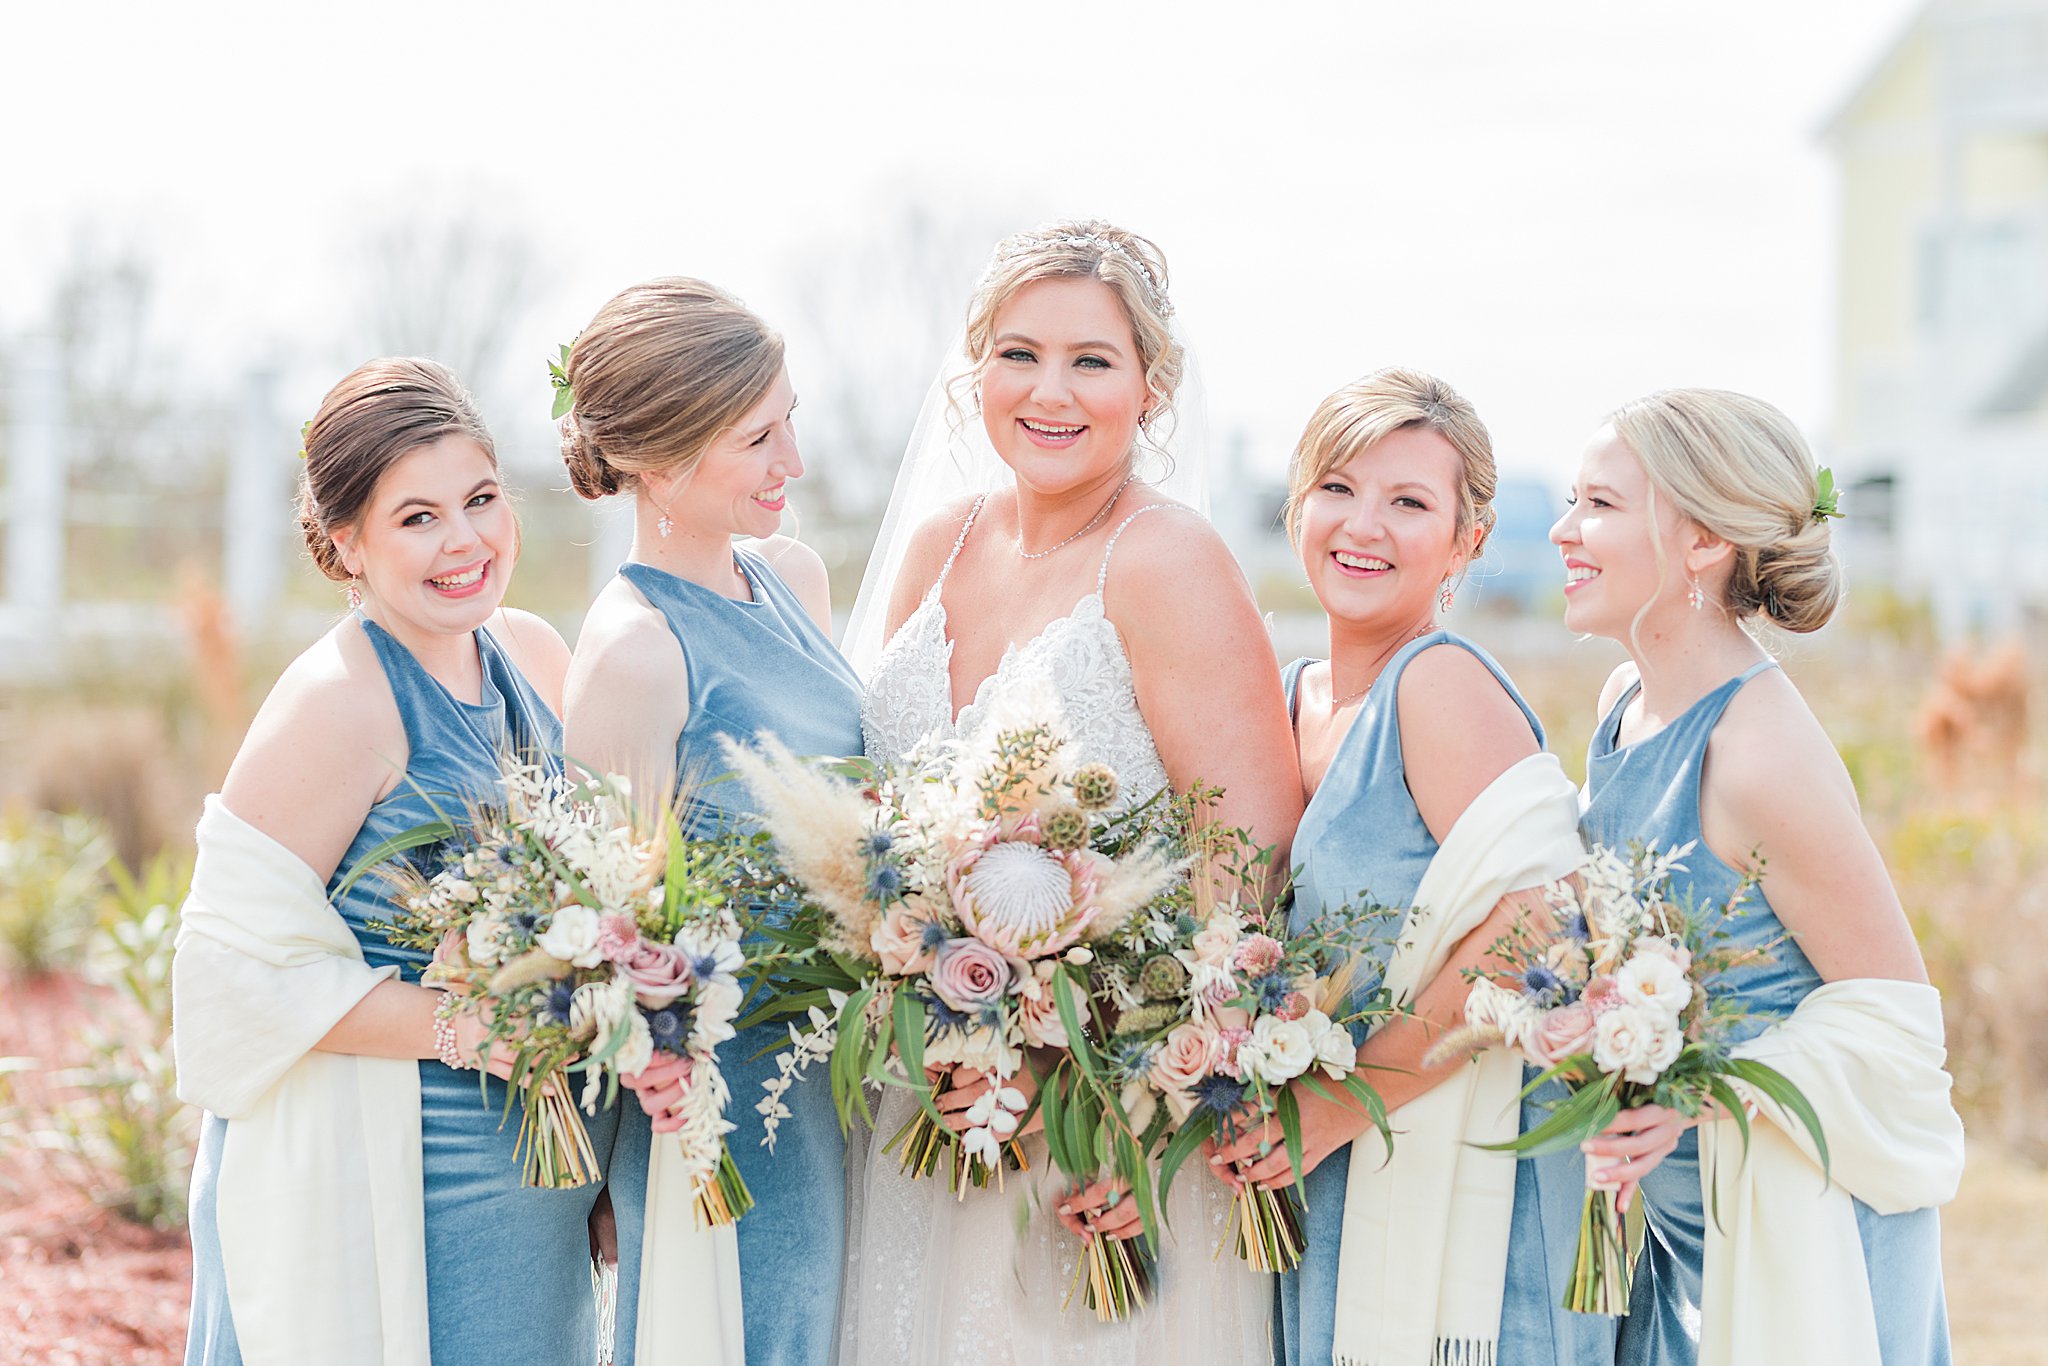 A Vista Creek Teal Blue Wedding